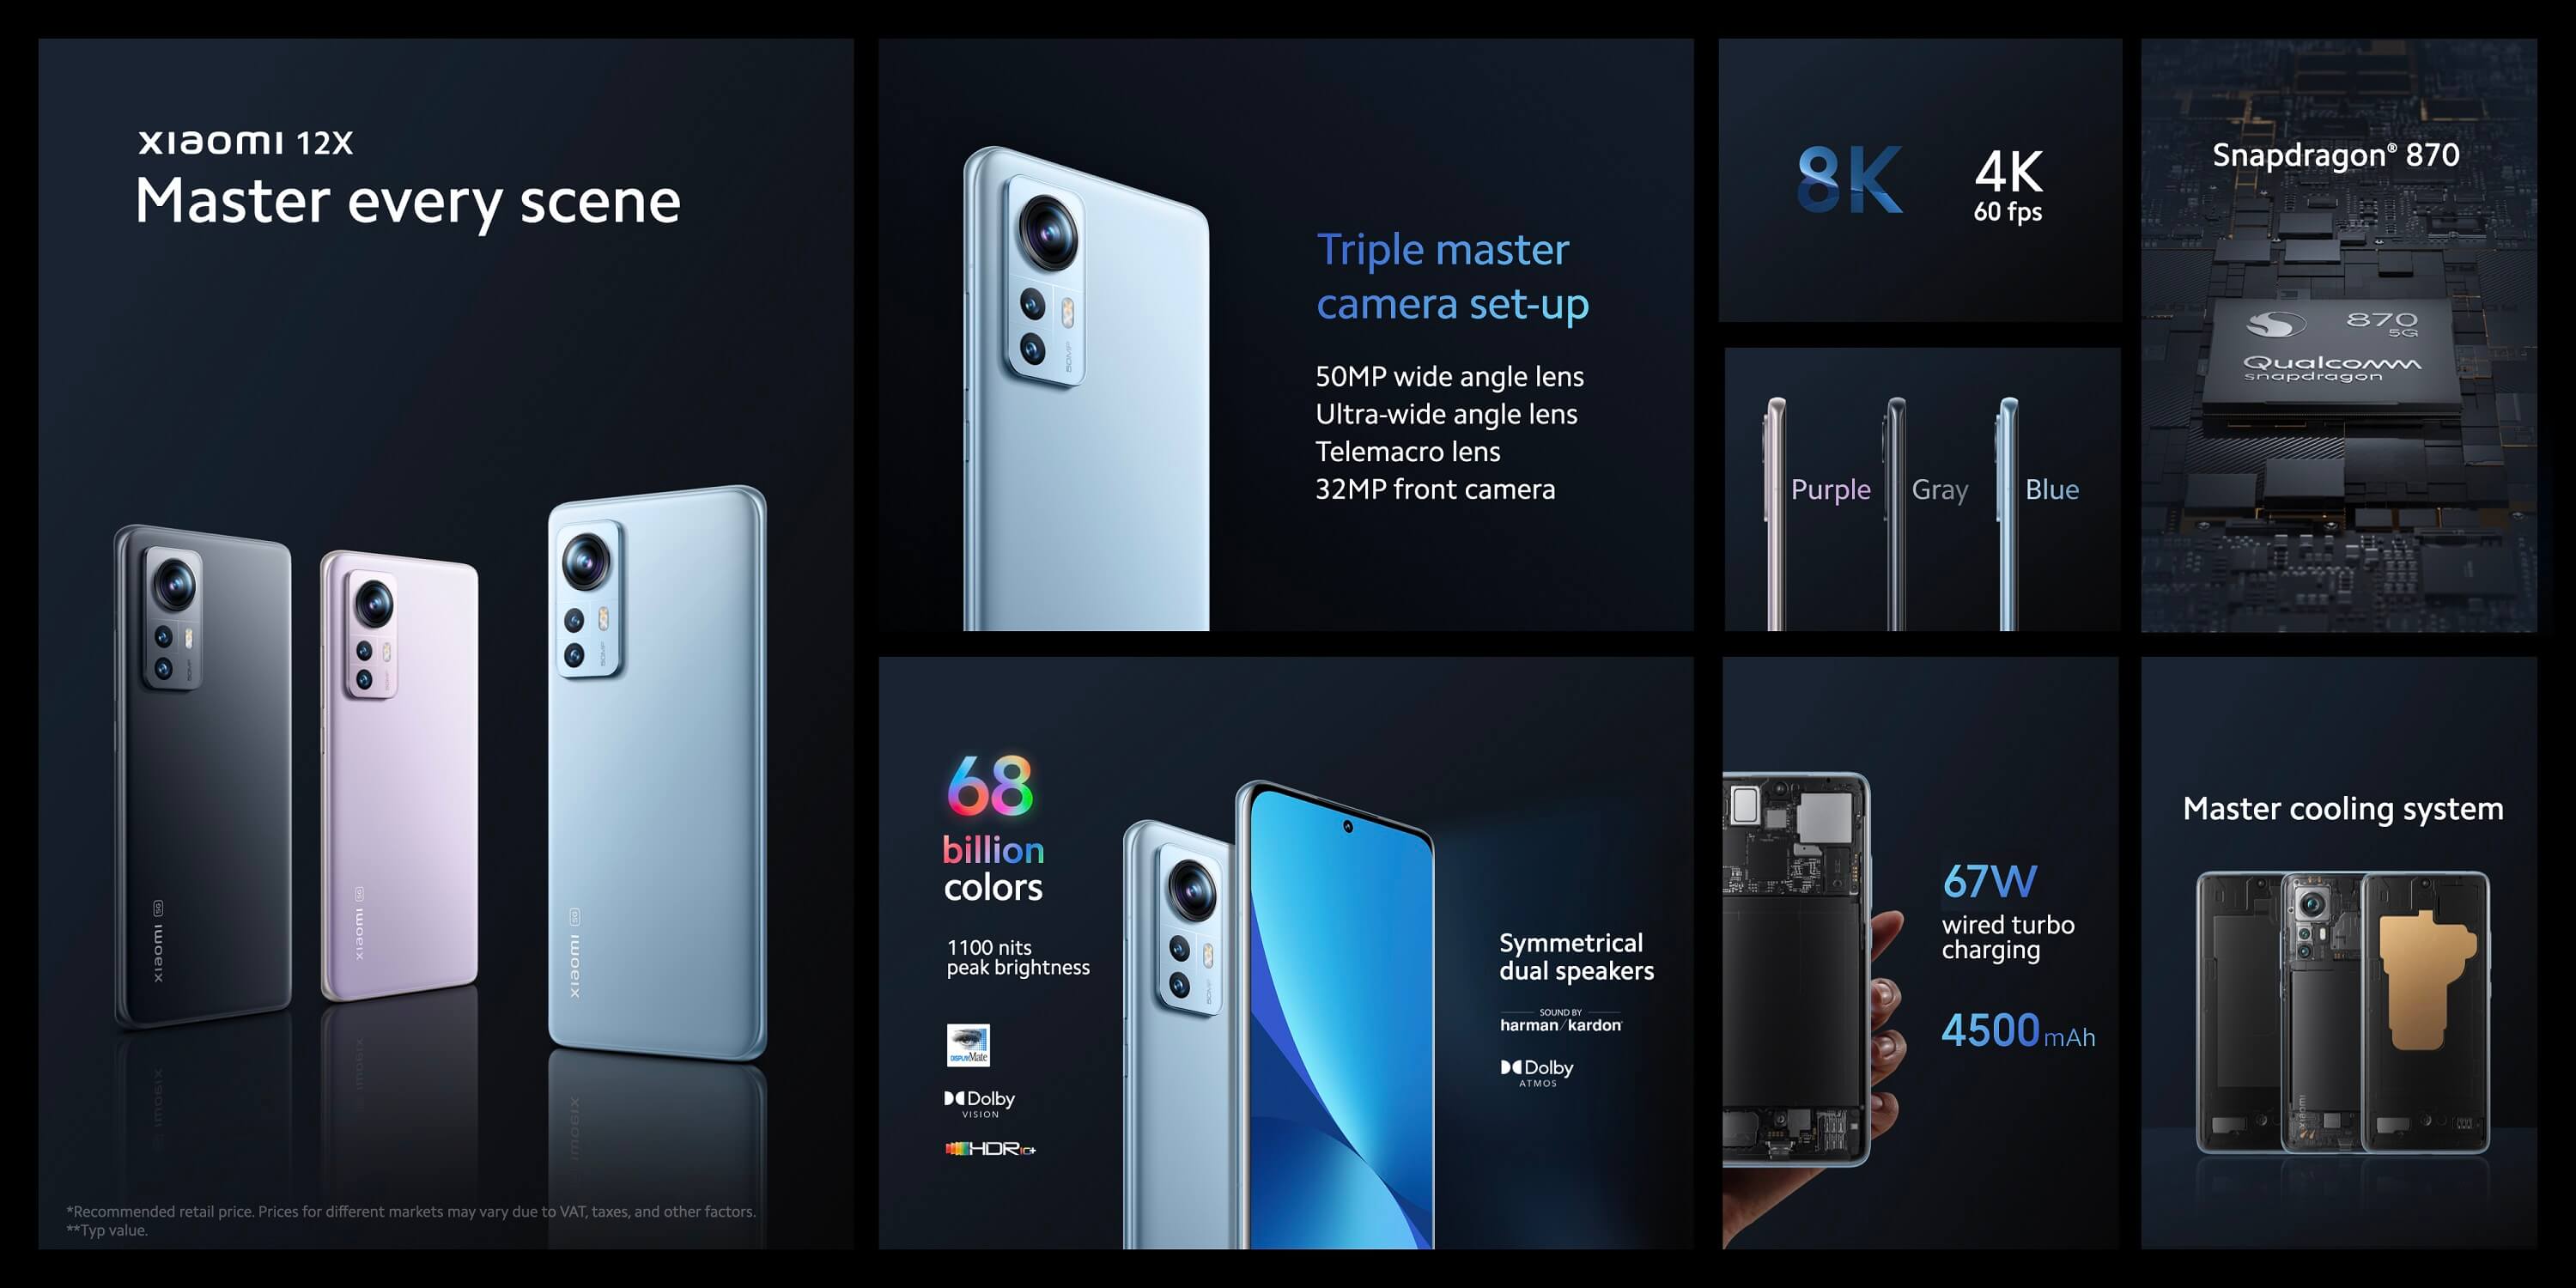 Xiaomi 12X 5G features global